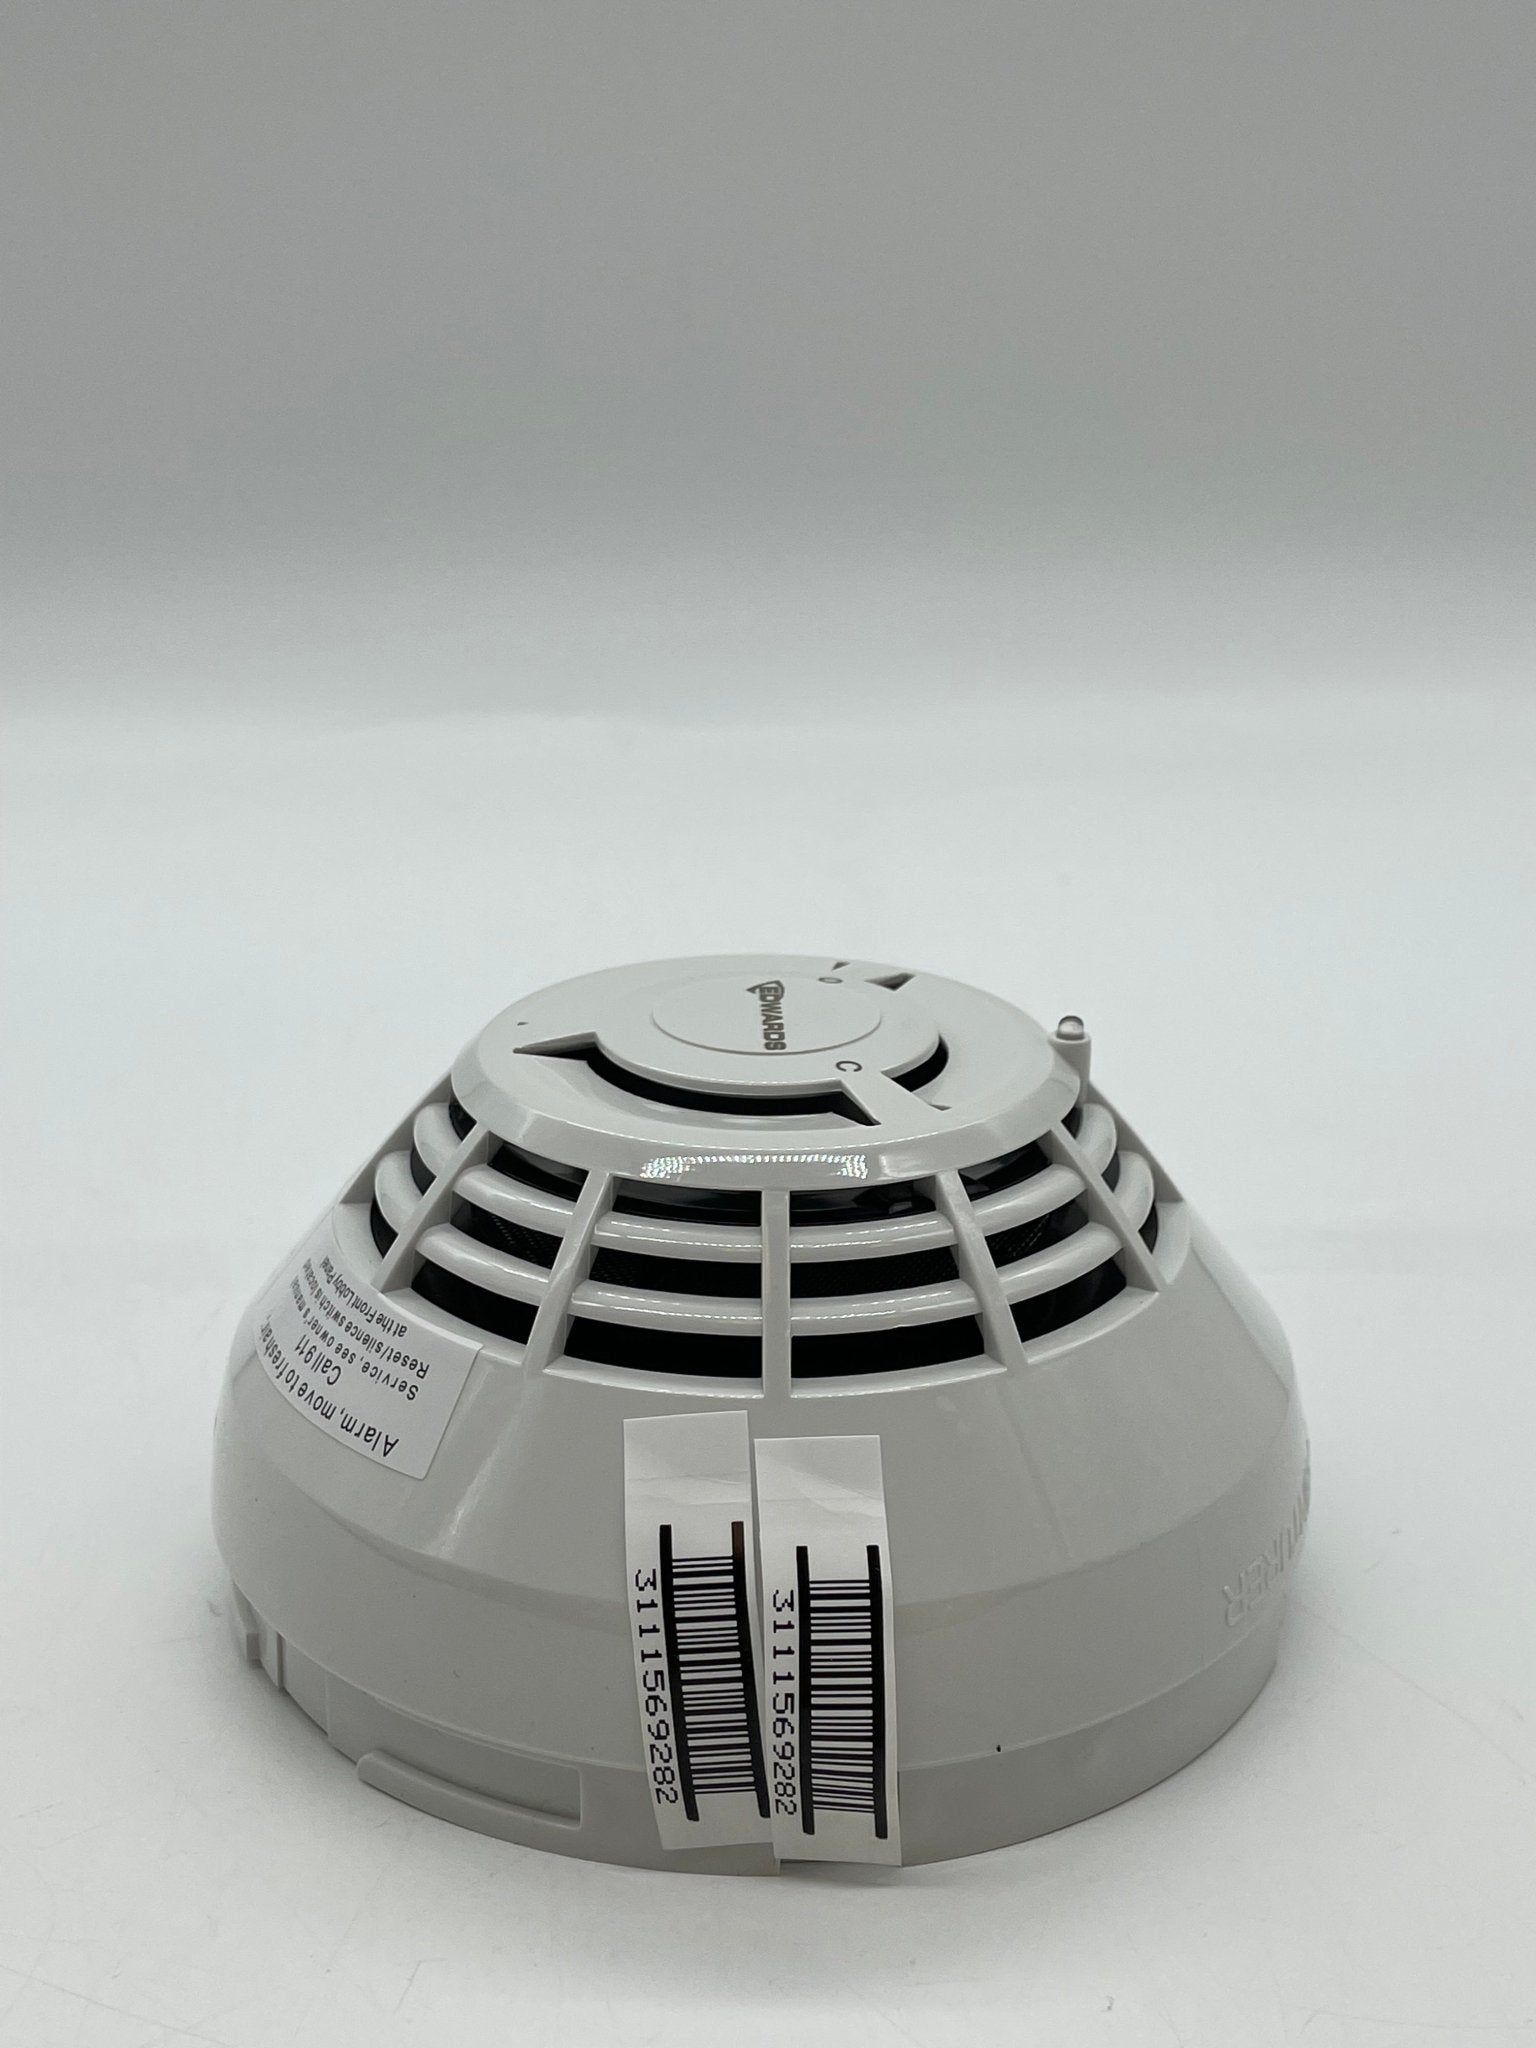 Edwards SIGA-OSCD - The Fire Alarm Supplier